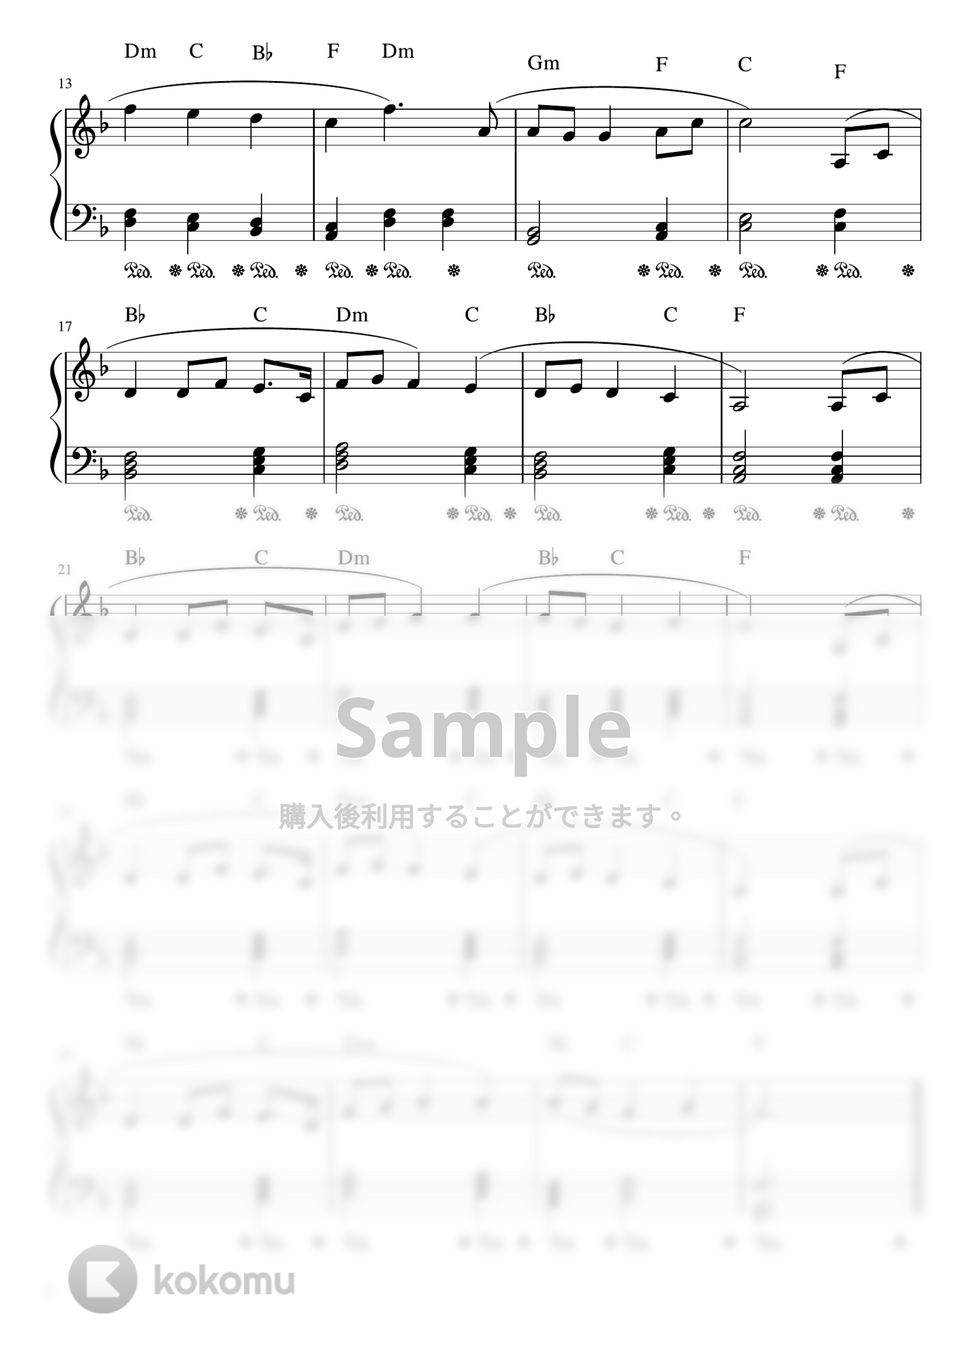 G.ホルスト - 惑星より「木星」 (F・ピアノソロ初級) by pfkaori